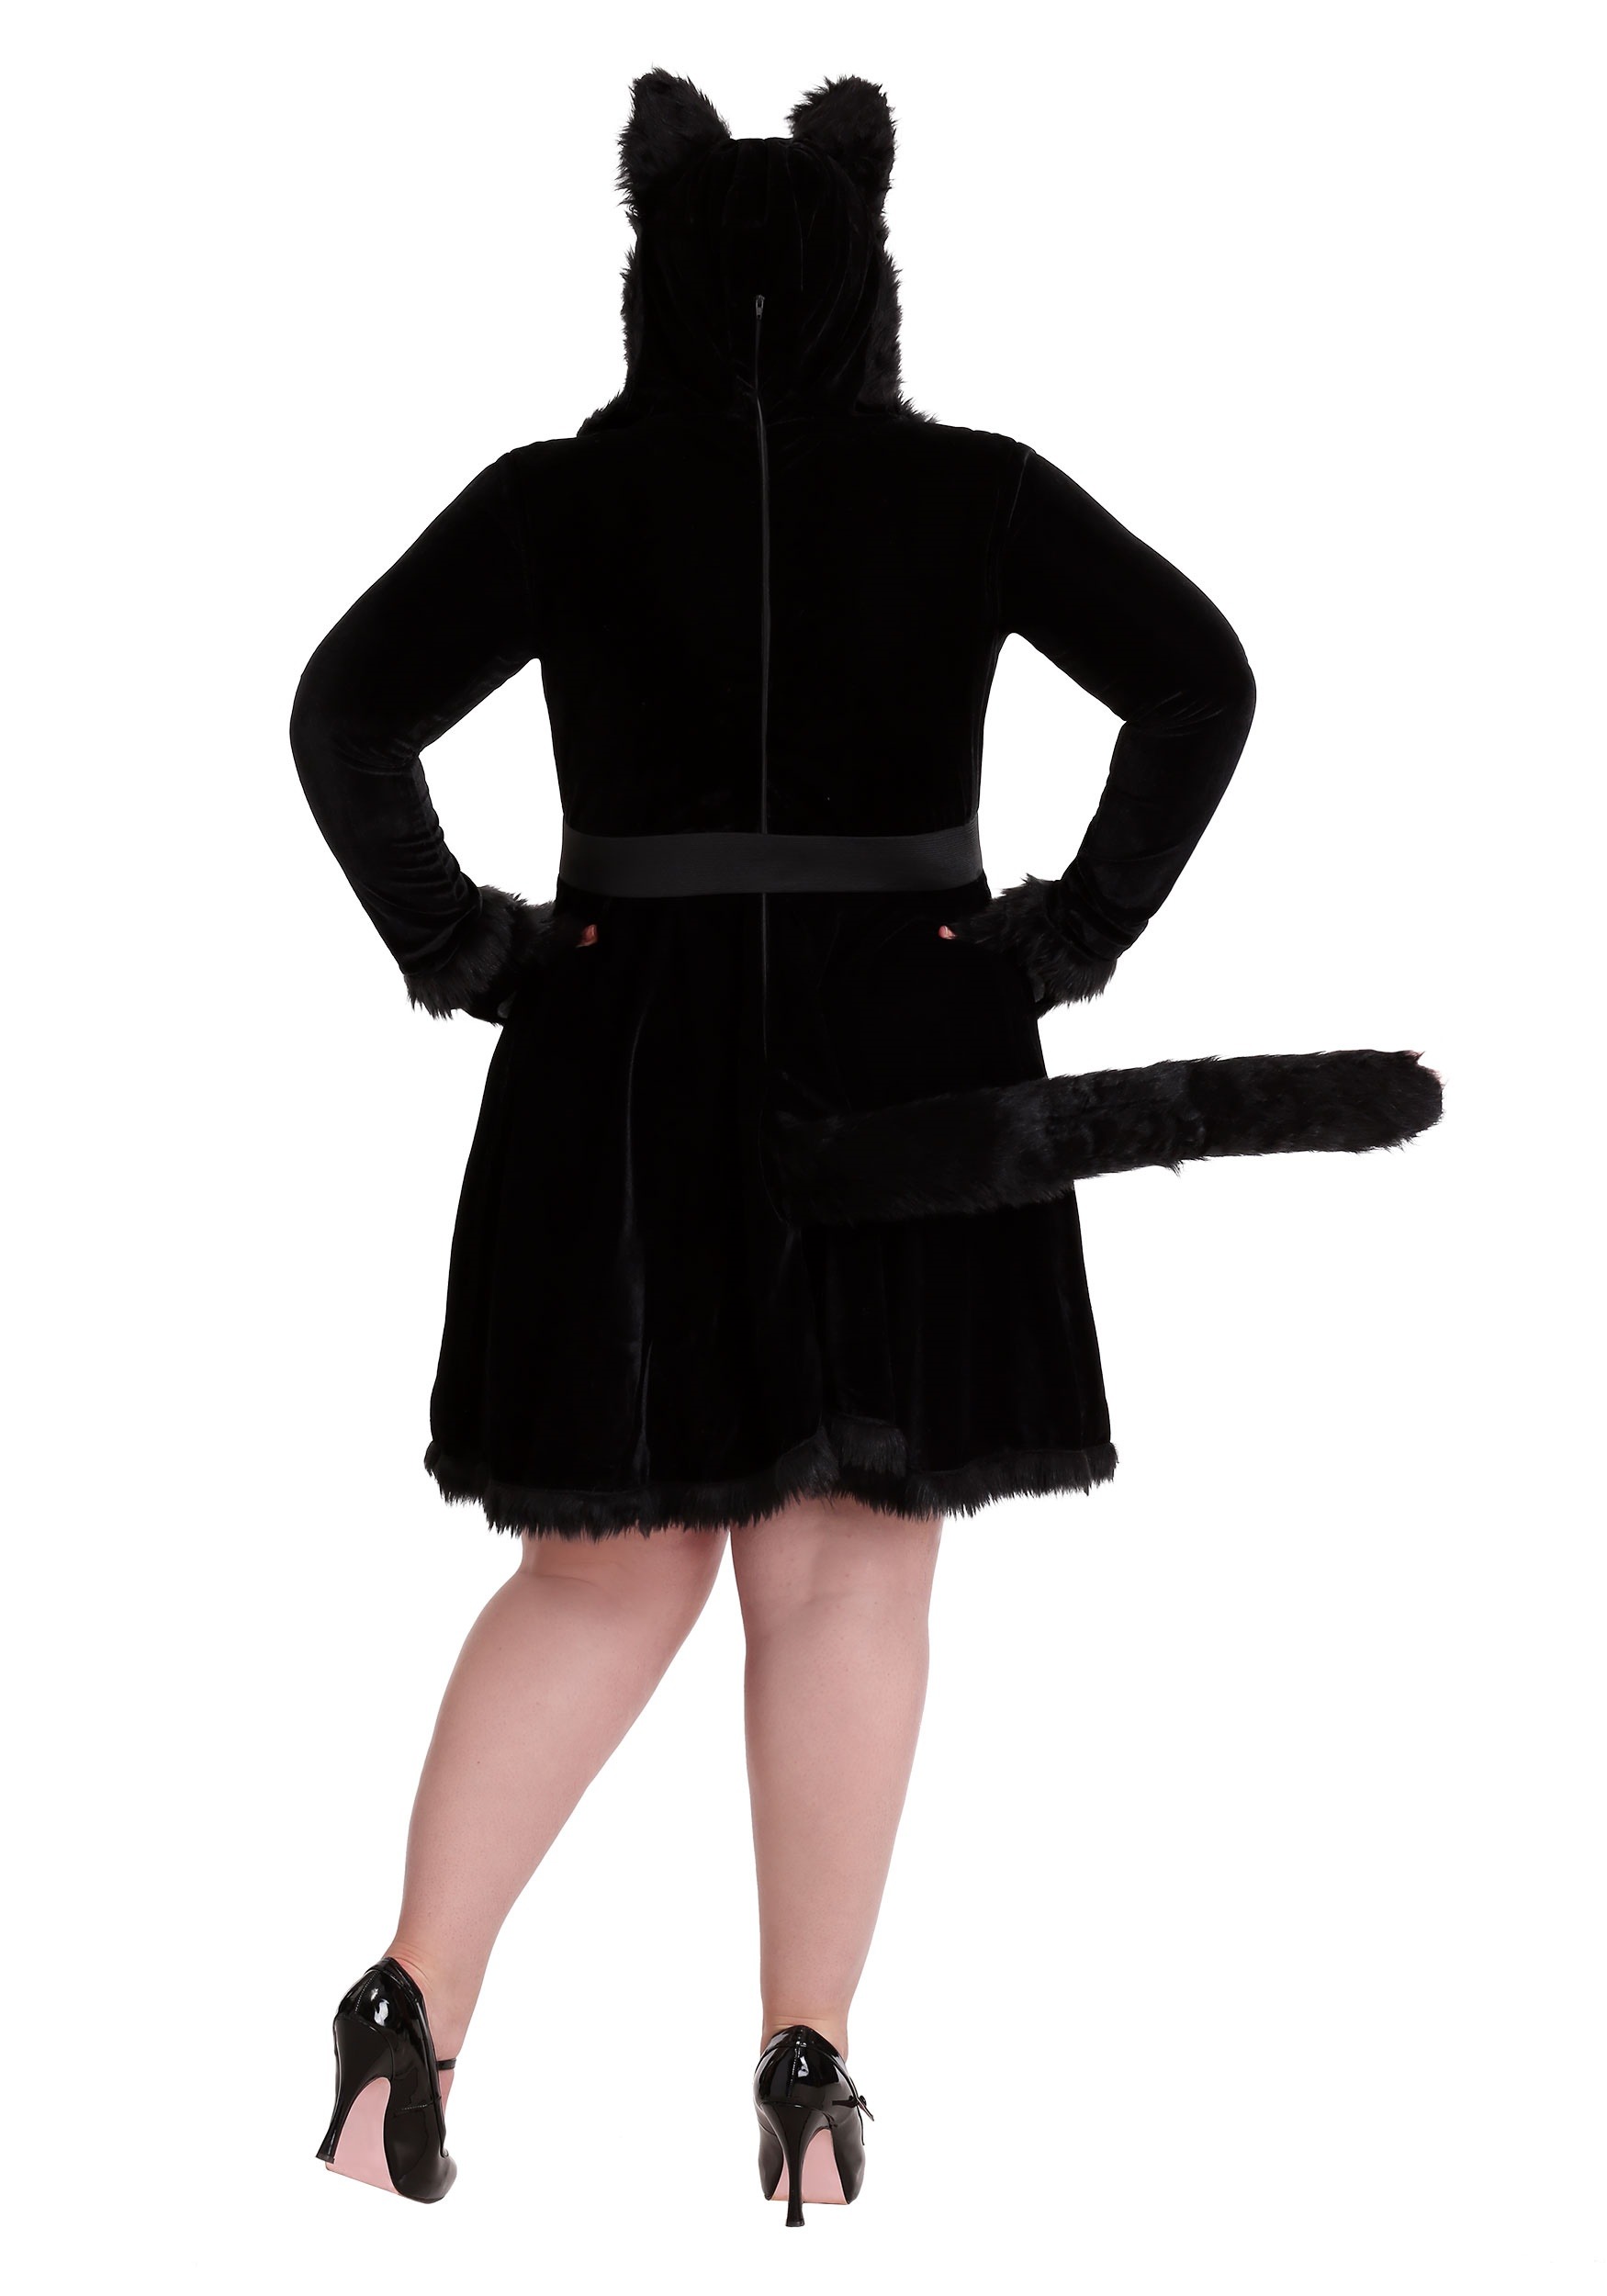 Black Cat Plus Size Fancy Dress Costume For Women , Plus Size Animal Fancy Dress Costumes